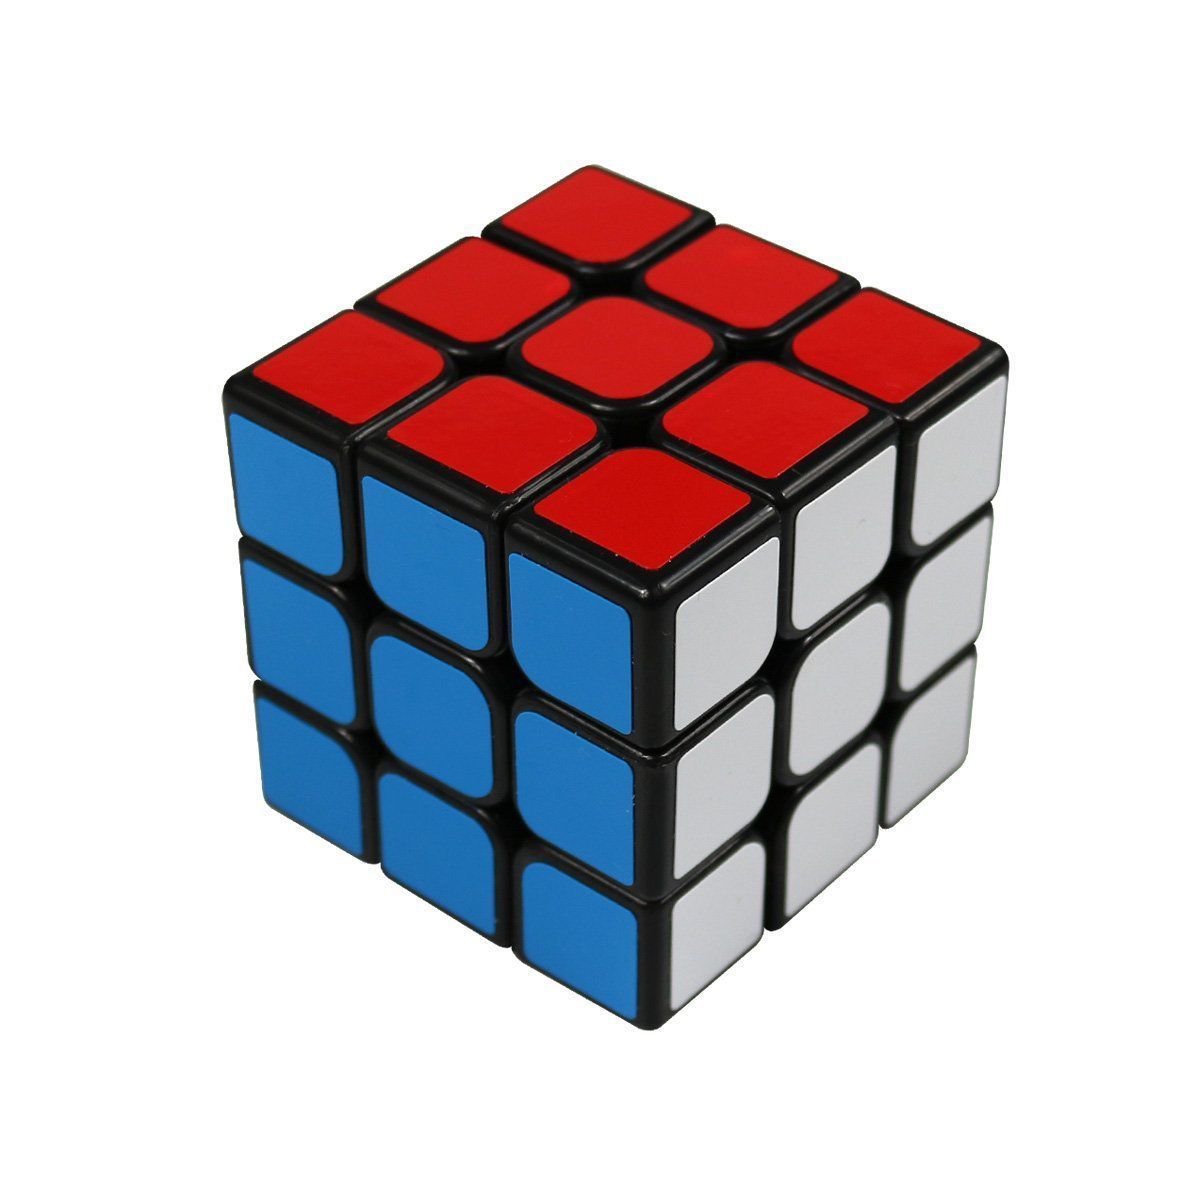 Найти игру разбери кубик. 3x3x3 Cube. Кубик Рубика 3x3x3. Rubik's Cube 3x3. Кубик Рубика 3x3 Ball Cube.